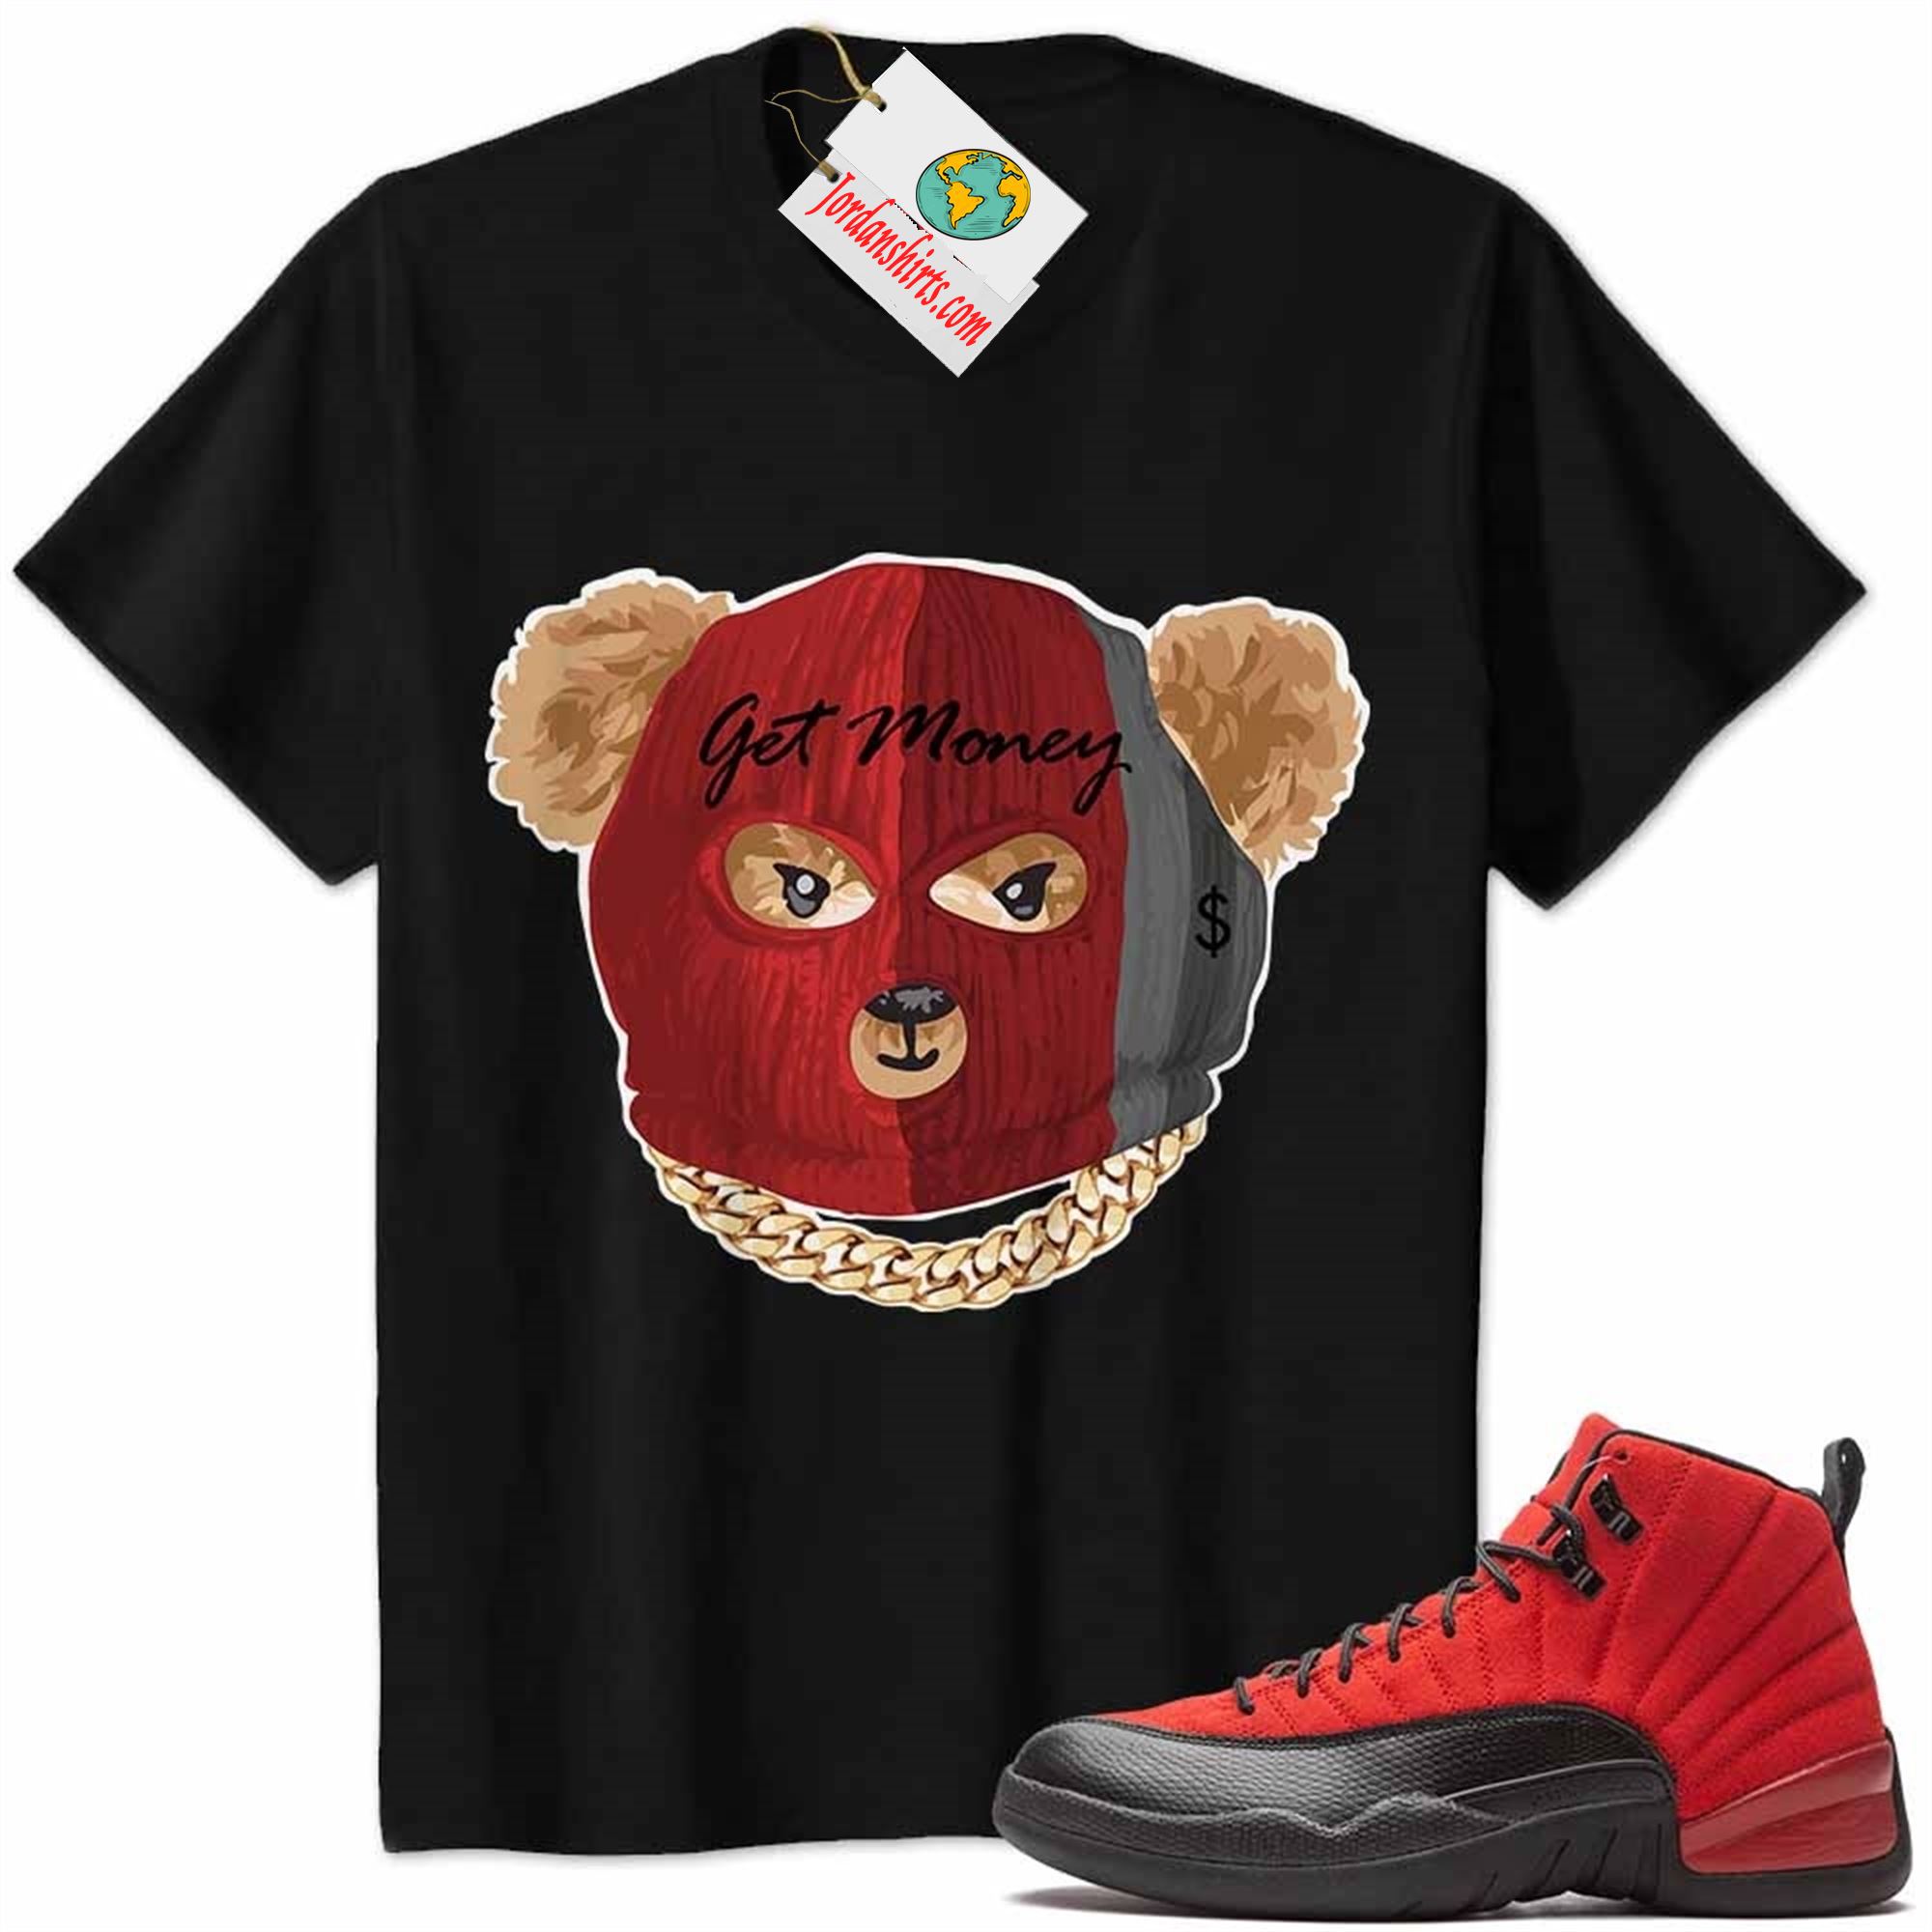 Jordan 12 Shirt, Robber Teddy Get Money Ski Mask Black Air Jordan 12 Reverse Flu Game 12s Size Up To 5xl